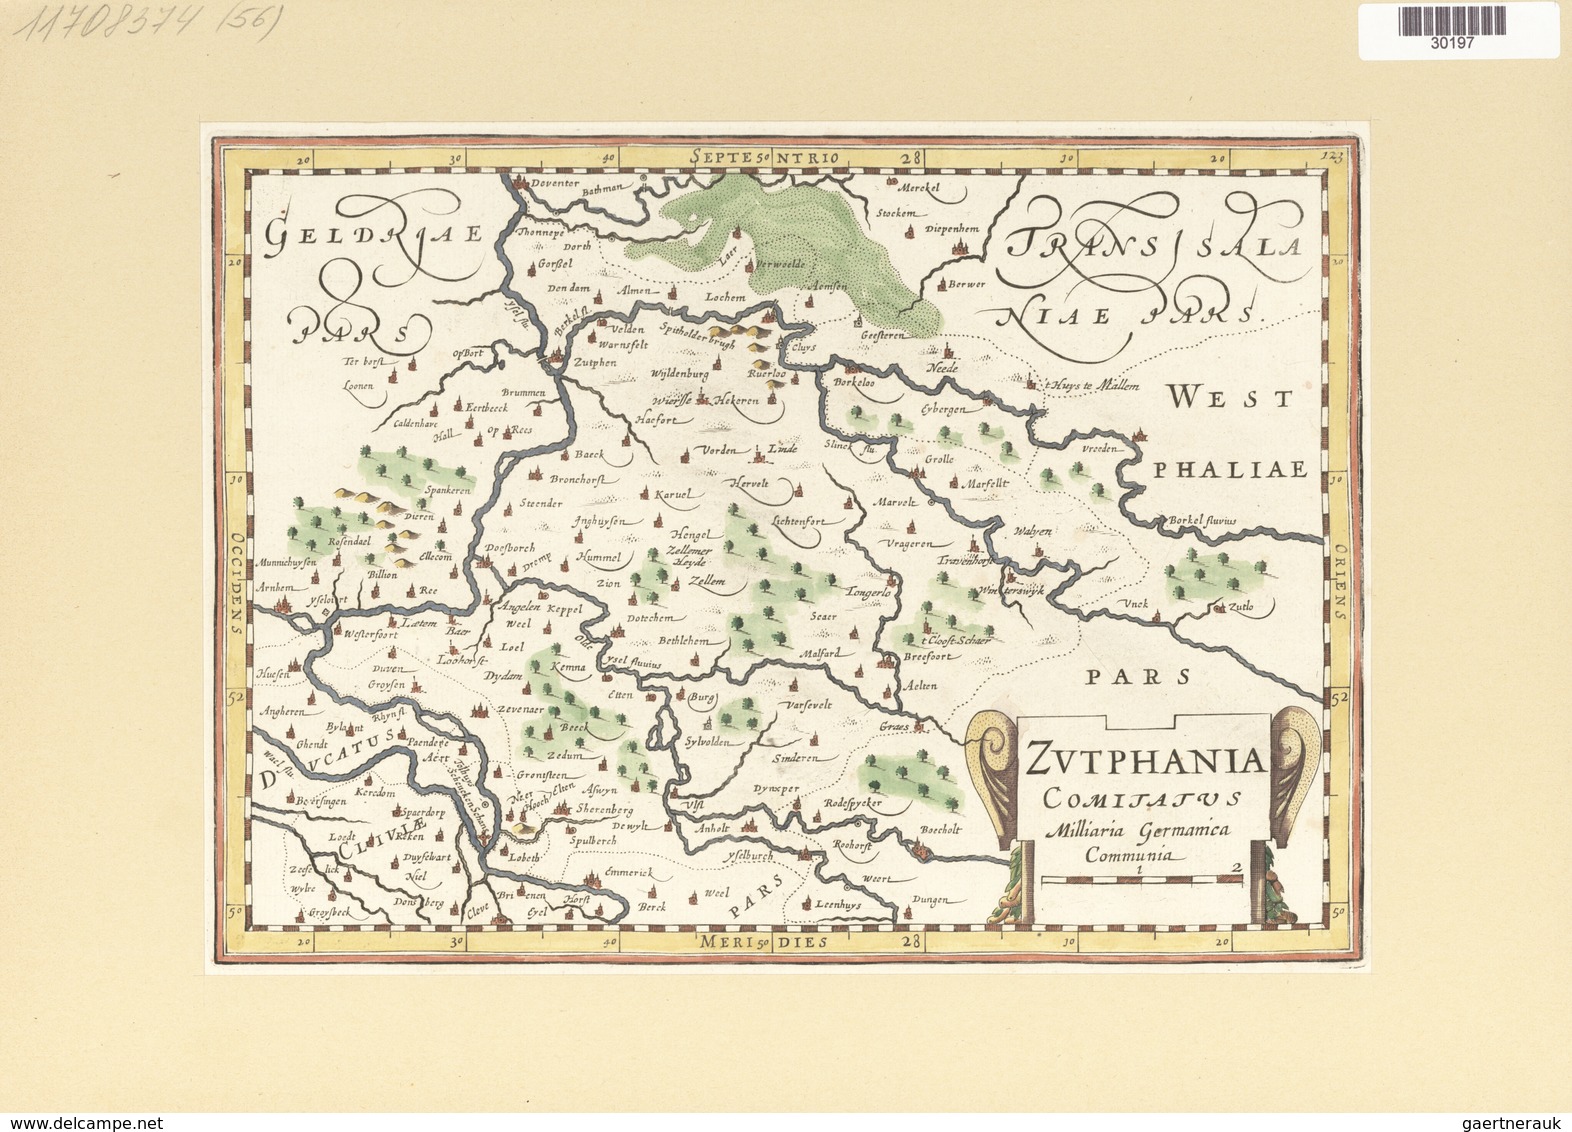 Landkarten Und Stiche: 1734. Zutphania Comitatus, By Gerardus Mercator Ca 1633, Published In His Atl - Geography